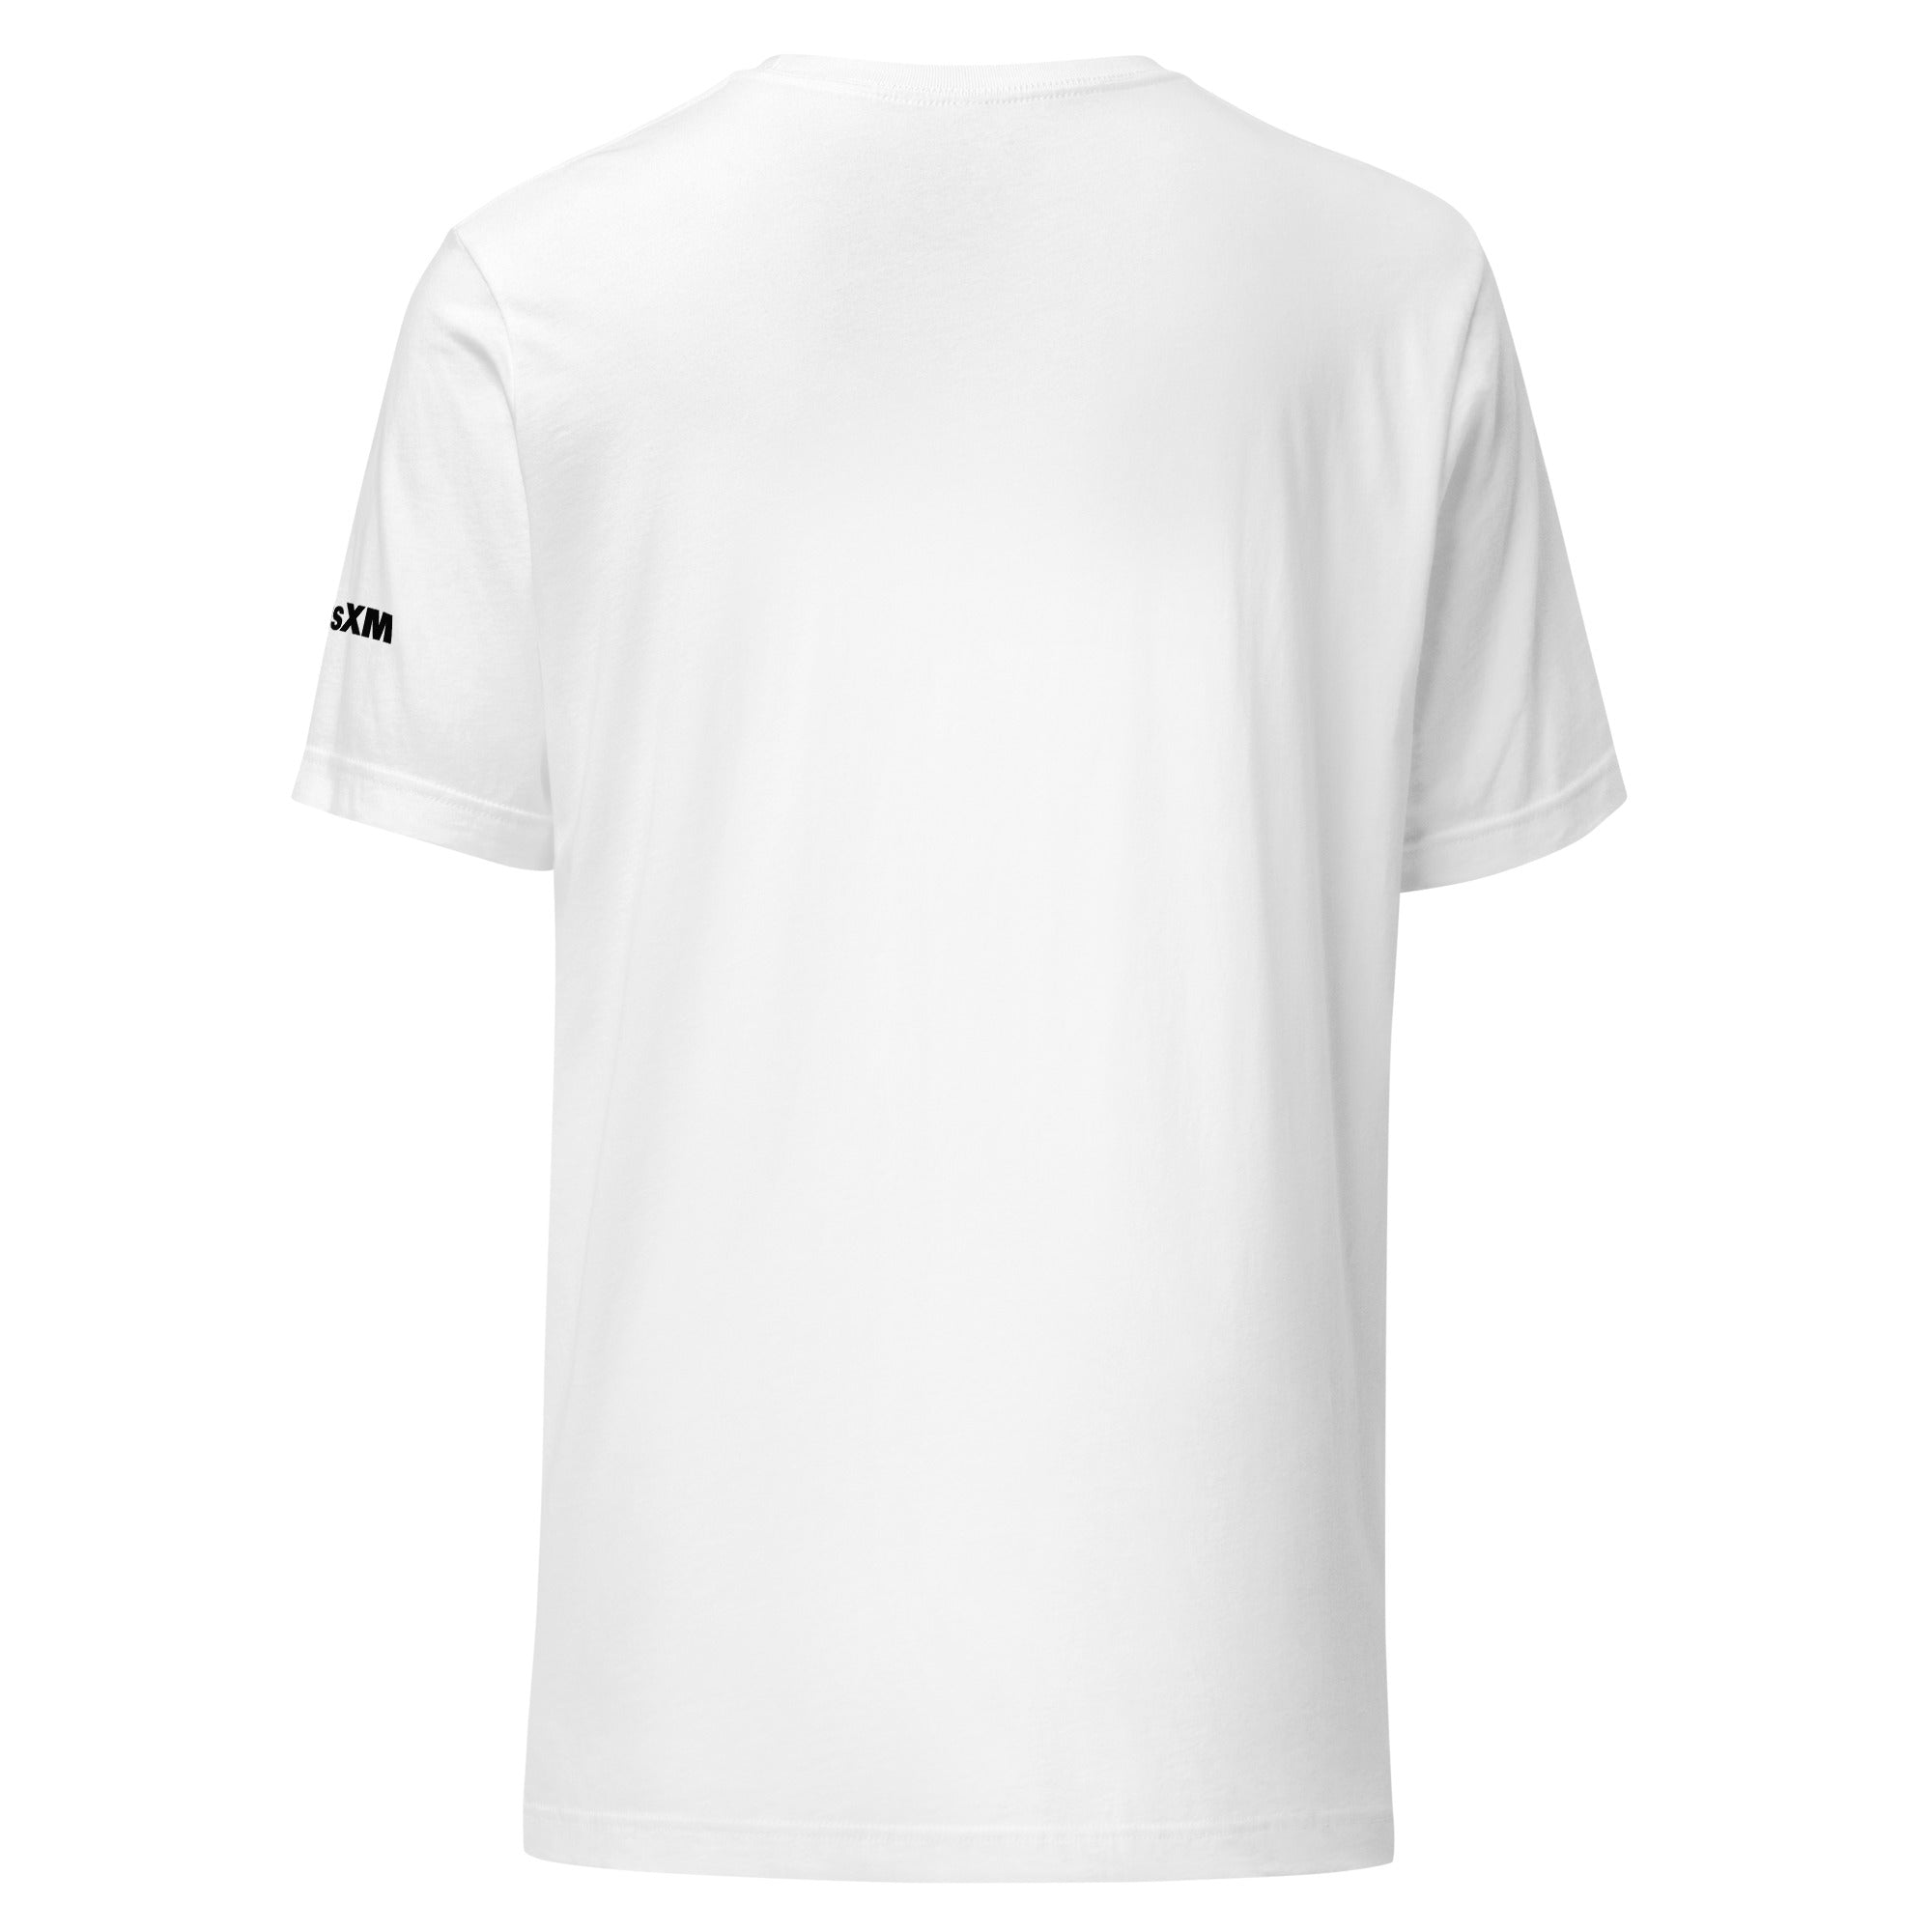 Mosaic: T-shirt (White)